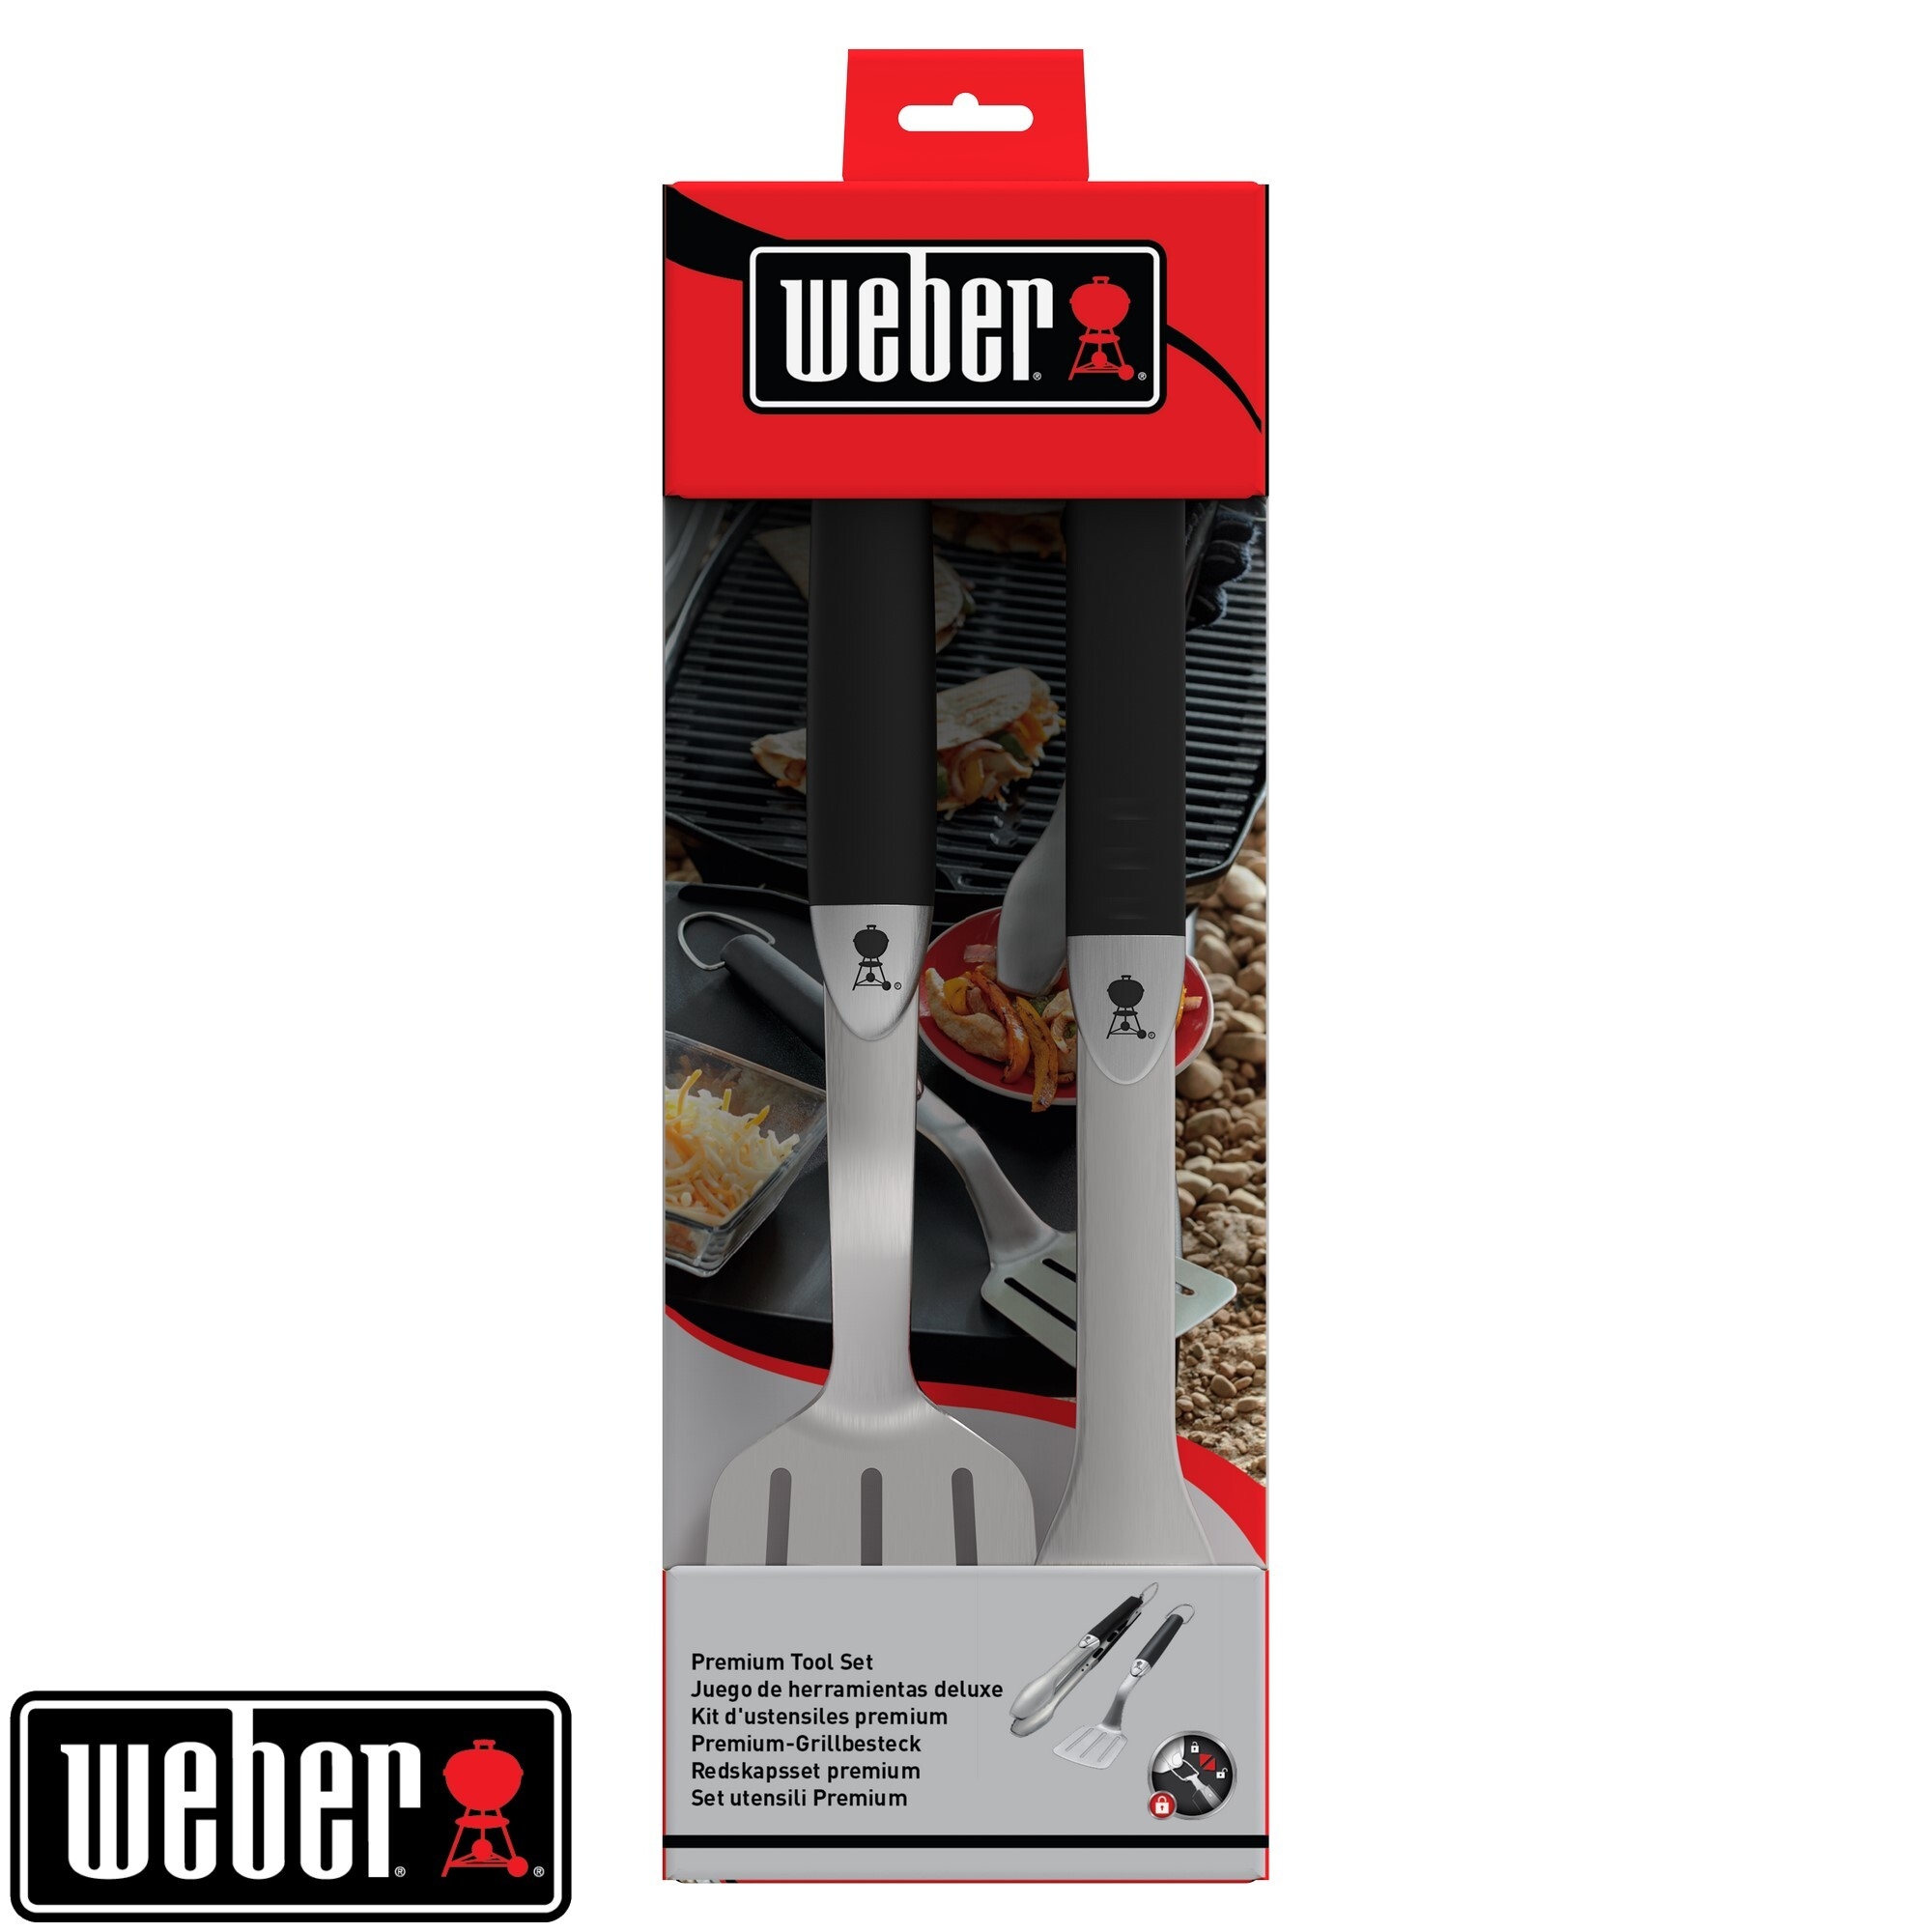 Weber Premium Grillbesteck Kompakt